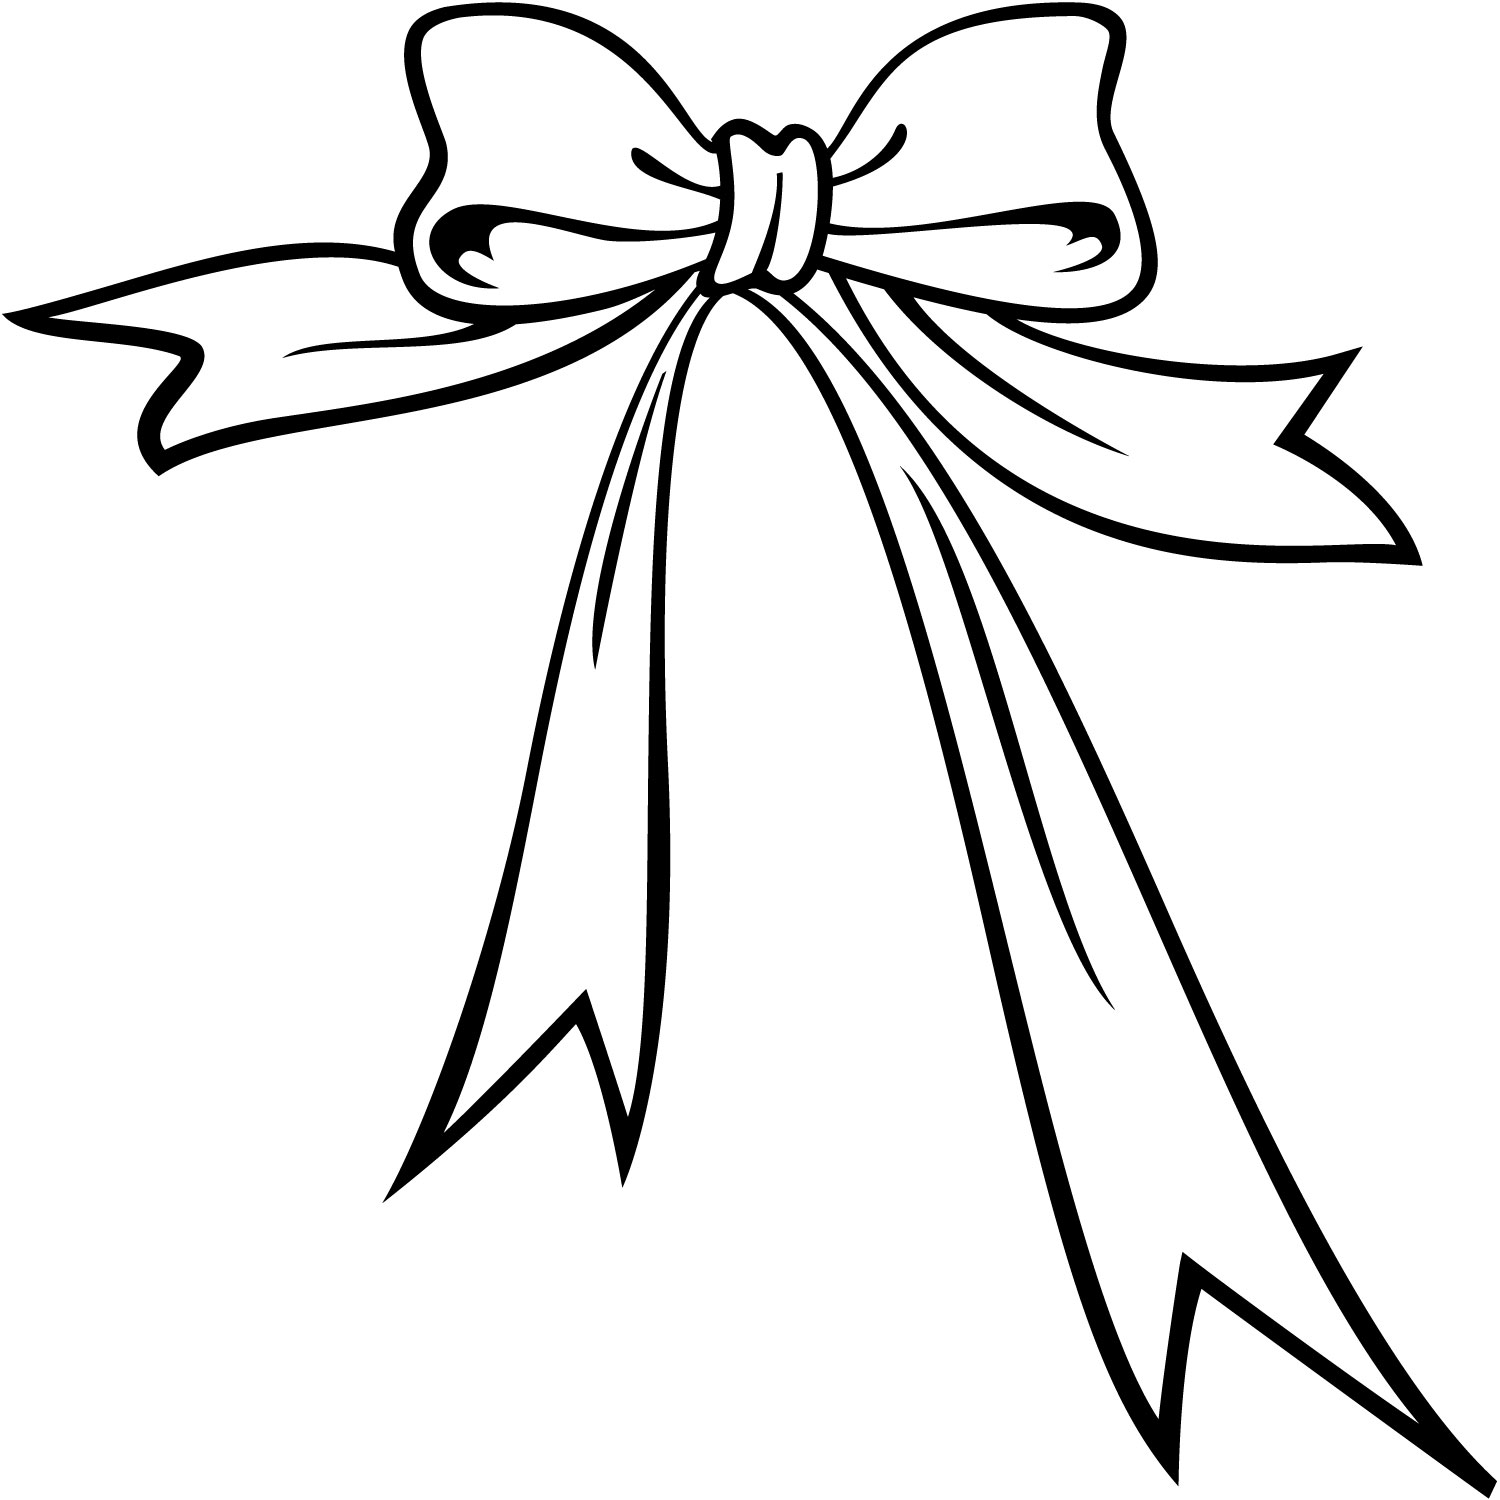 Bow clipart black and white - ClipartFox